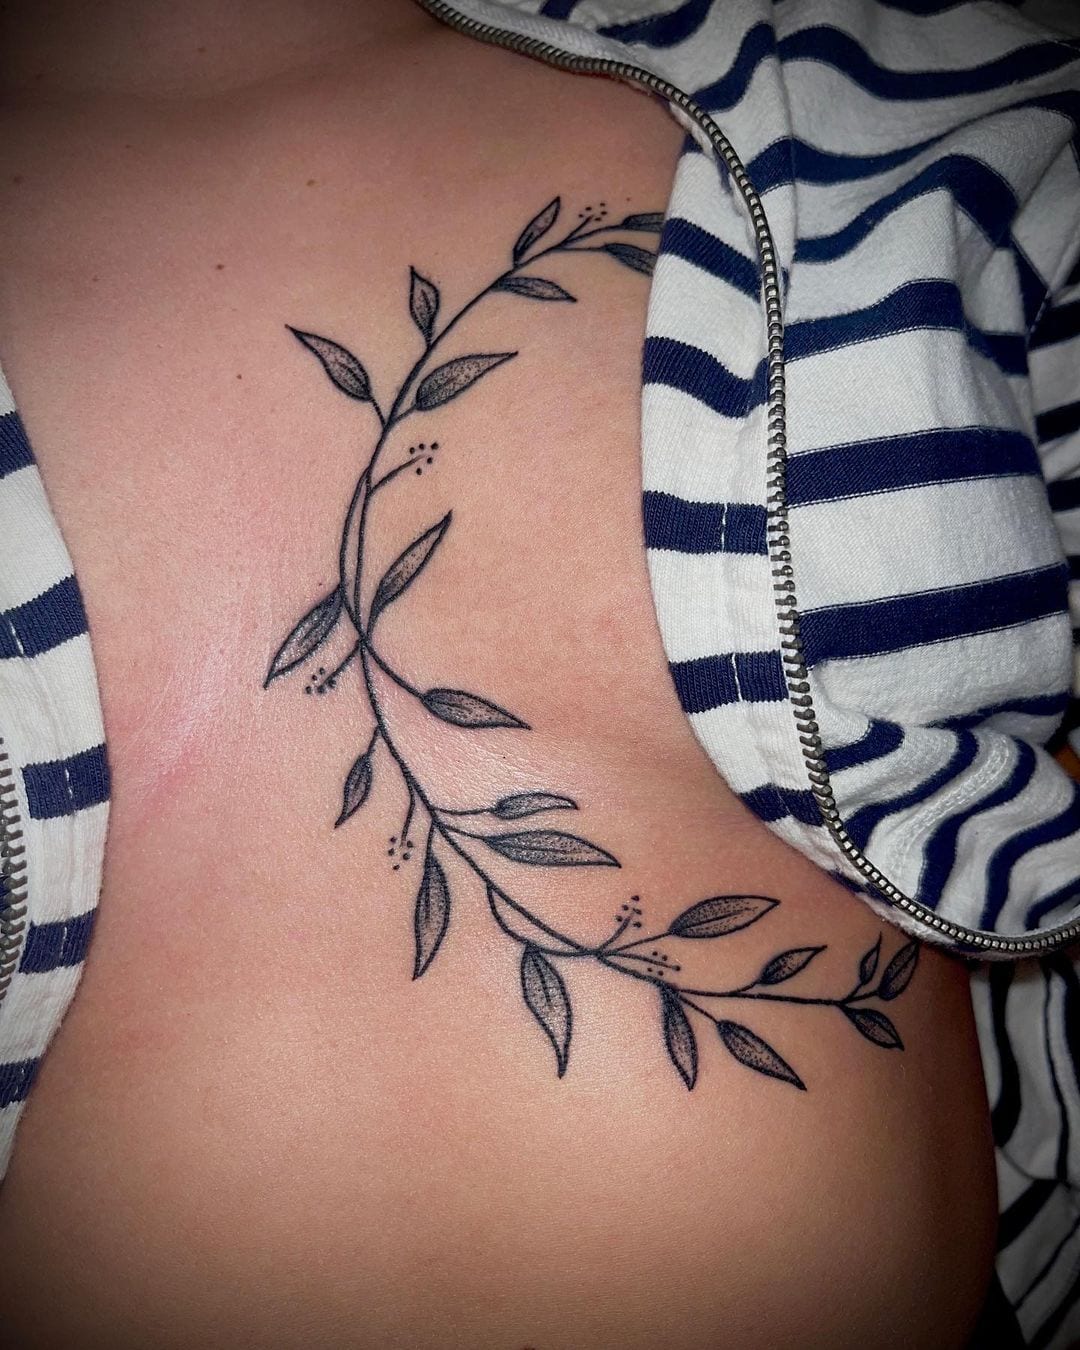 TAFLY Flower Vine Temporary Tattoo Body Art Transfer Sticker for Women 5  Sheets : Amazon.ae: Beauty